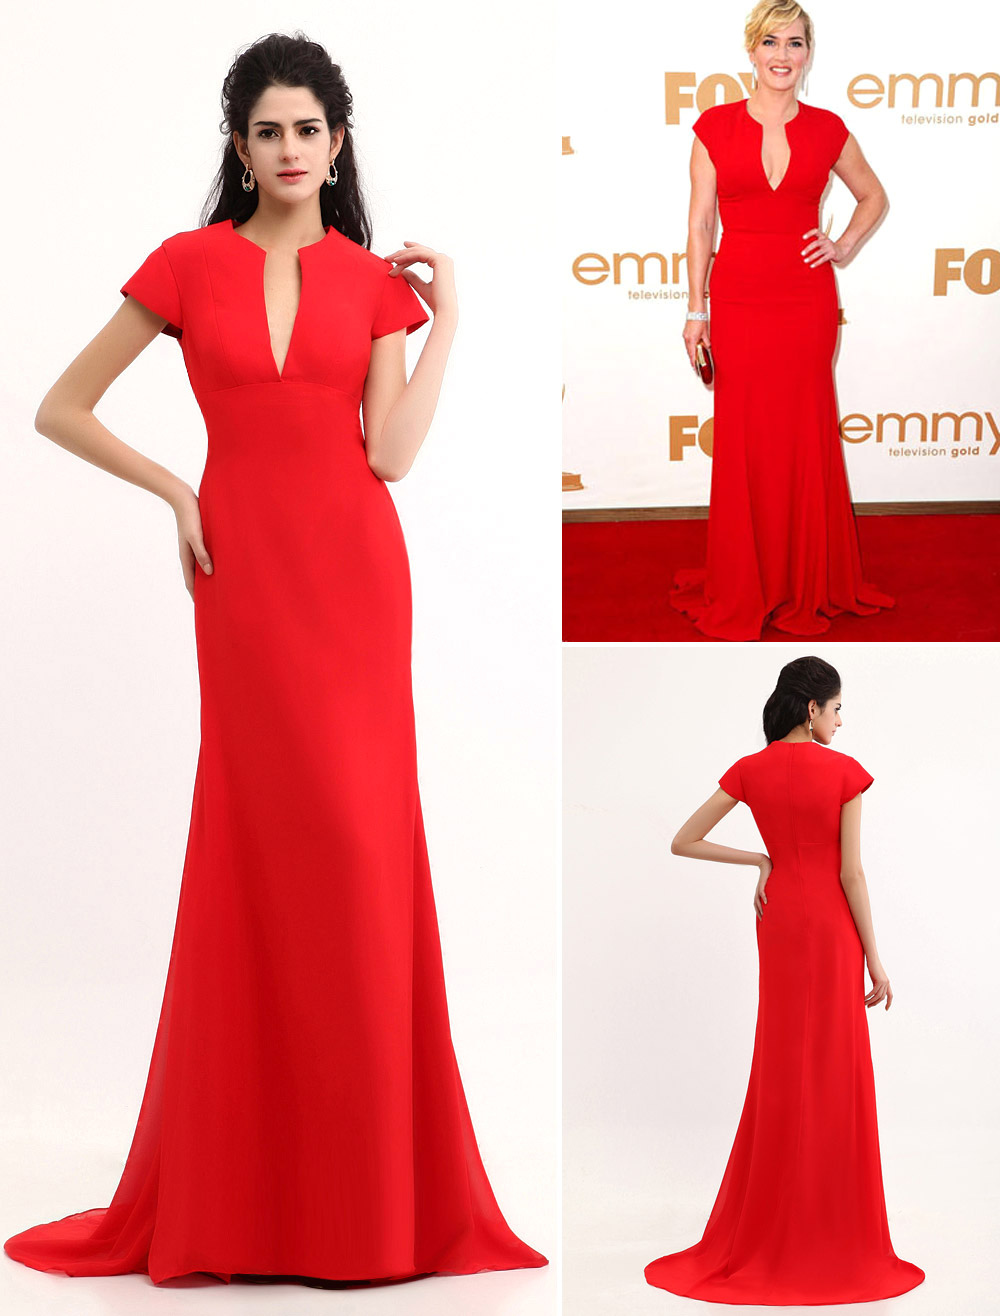 Red Kate Winslet Floor Length Chiffon Emmy Awards Dress (Wedding Emmy Awards Dresses) photo